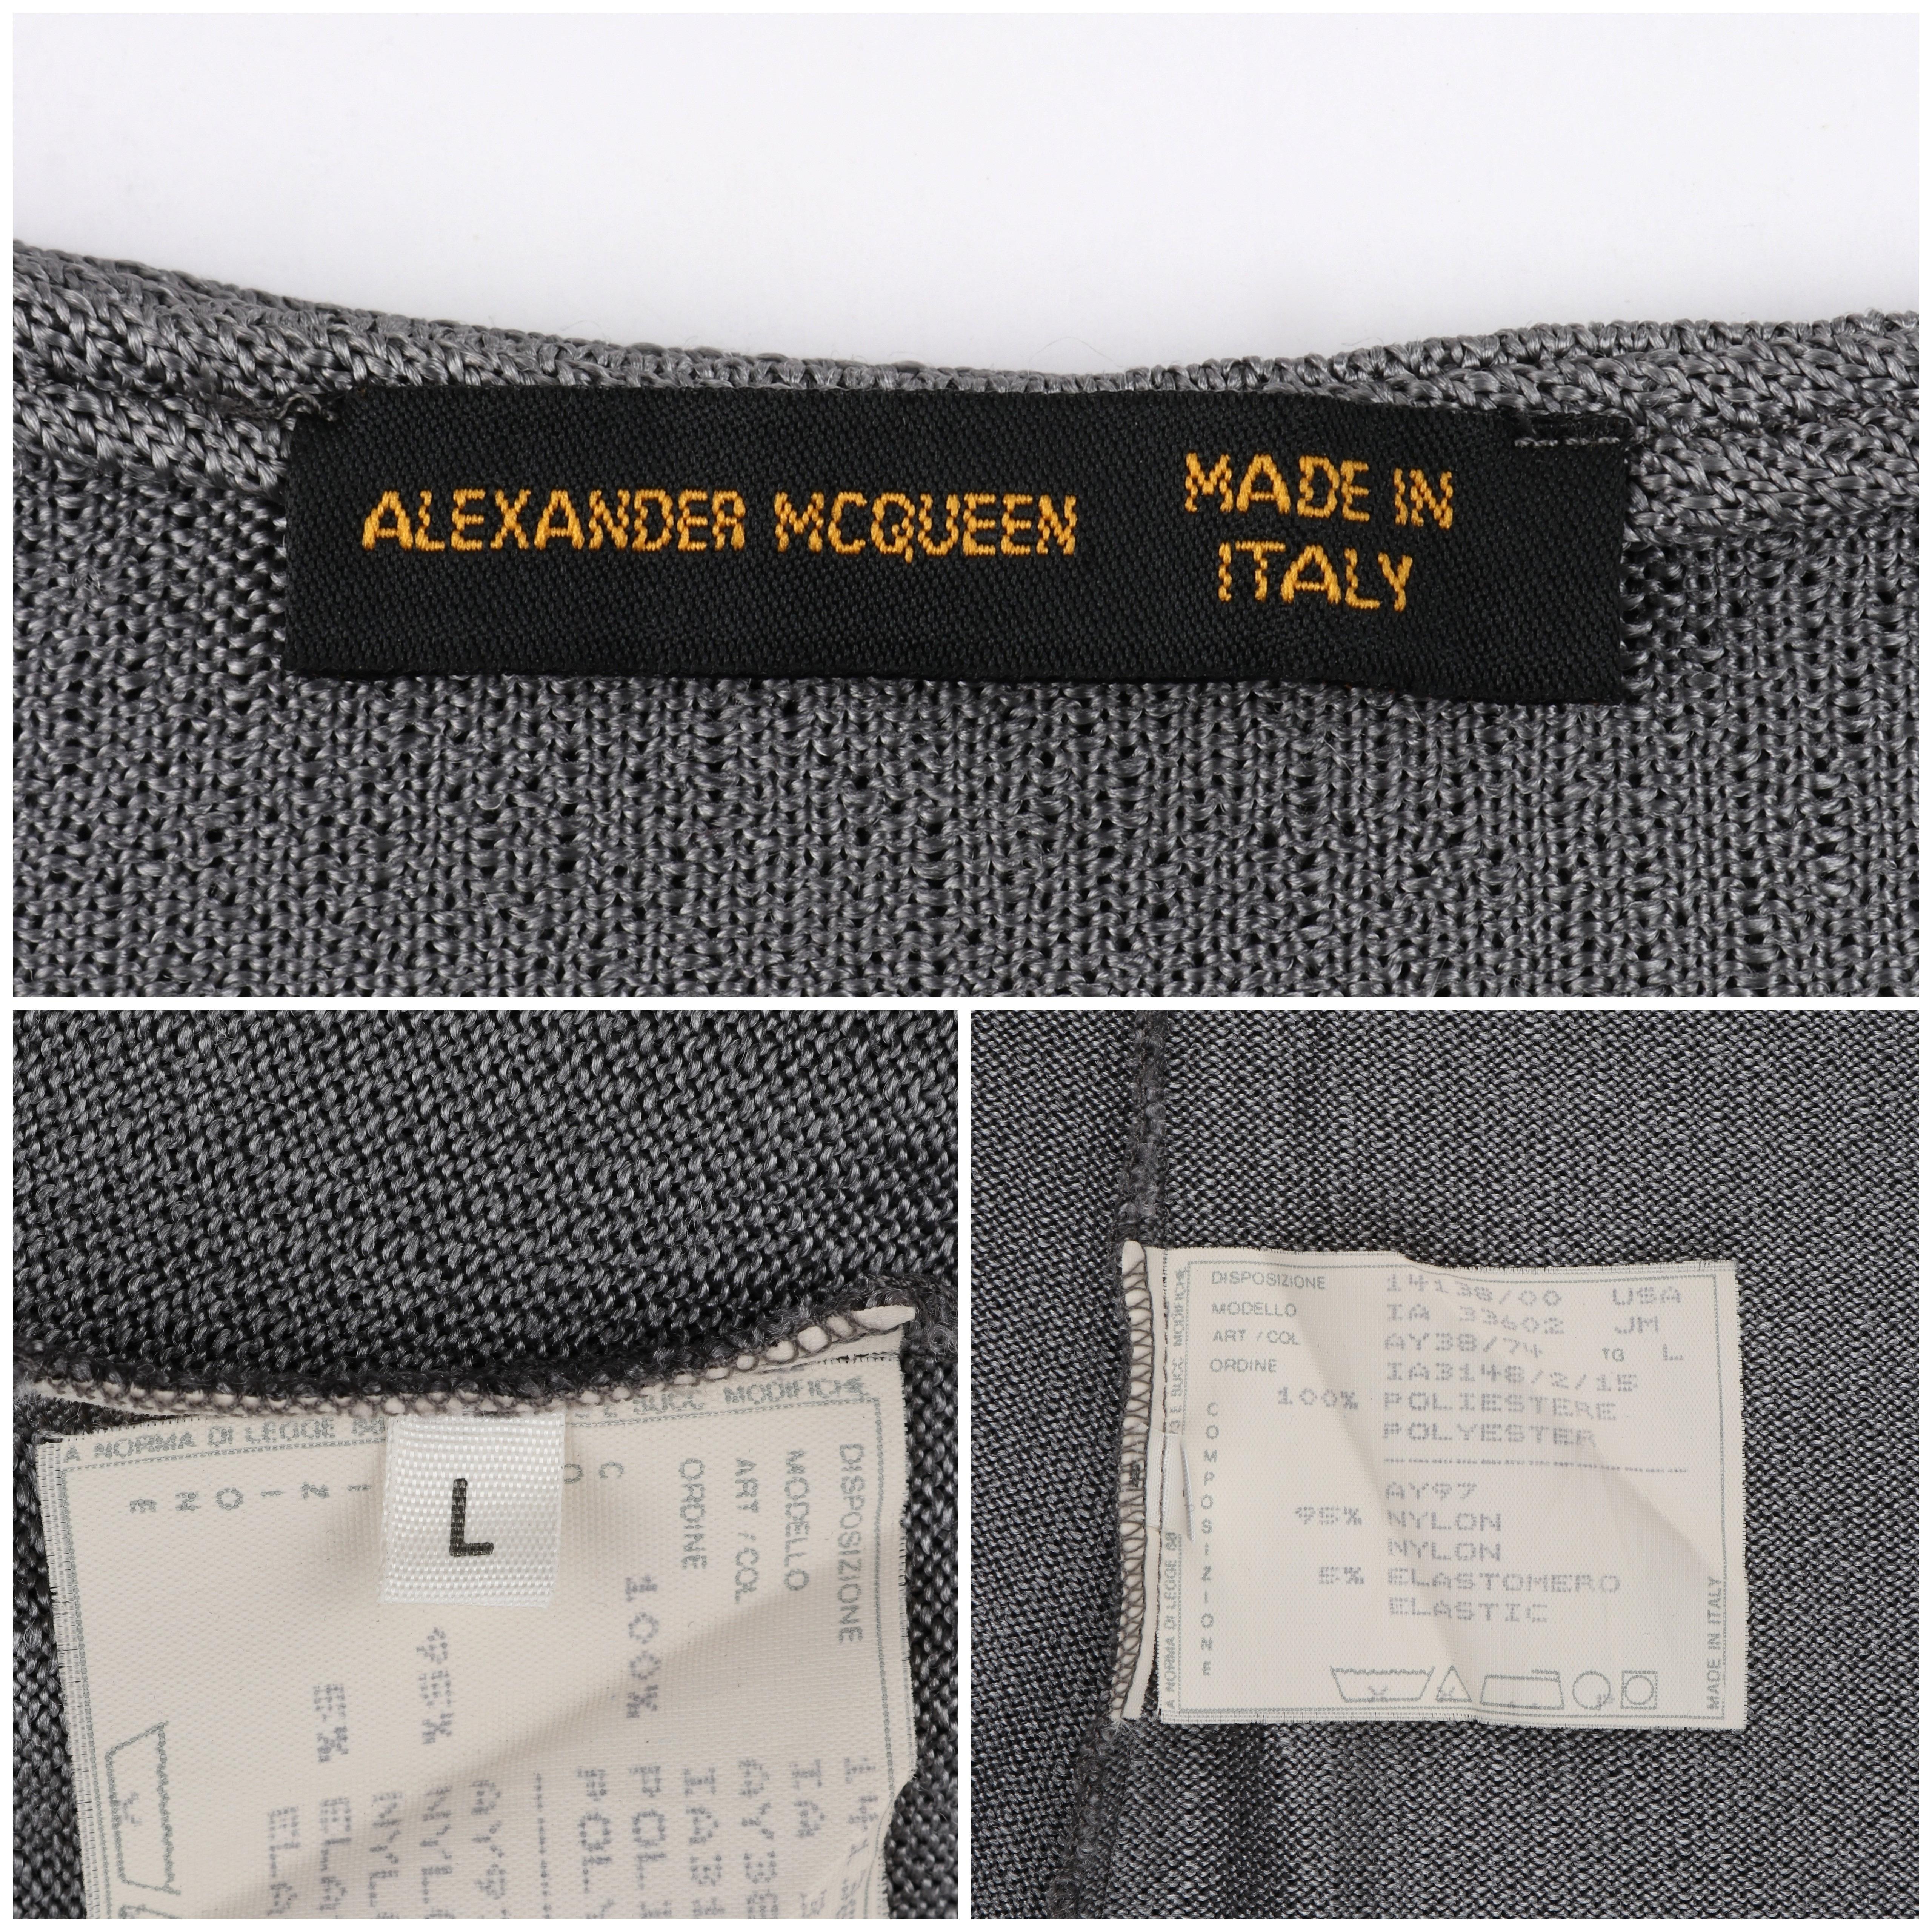 ALEXANDER McQUEEN S/S 1998 “Golden Shower” Metallic Sheer Mesh Panel Knit Top In Good Condition For Sale In Thiensville, WI